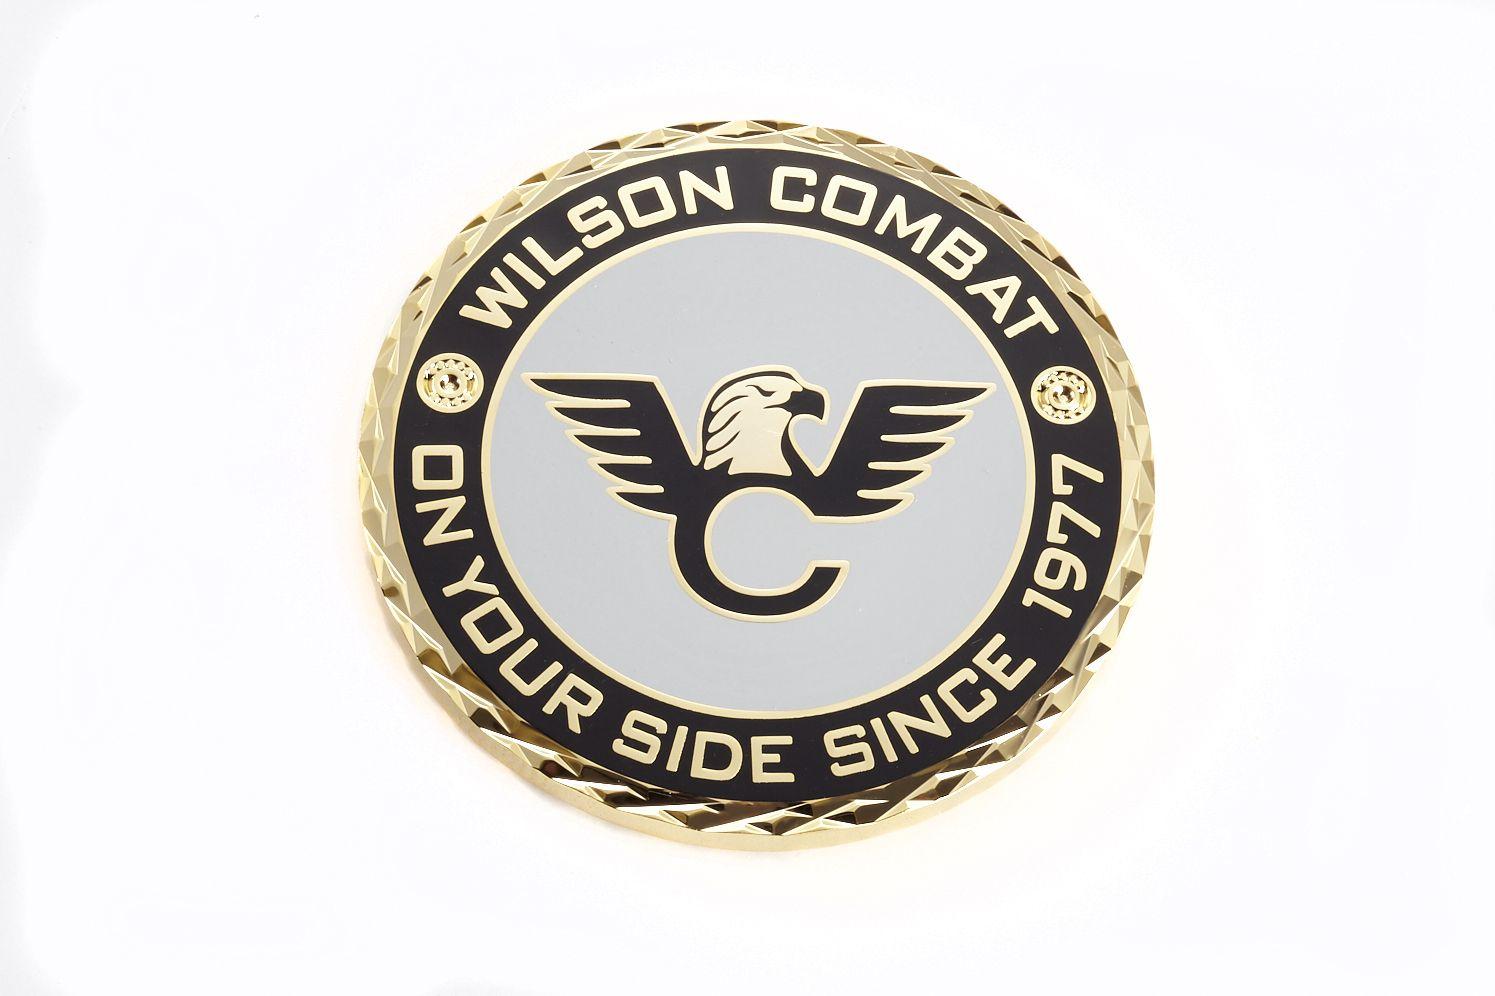 Wilson Combat Logo - All Wilson Combat Logo Items-https://shopwilsoncombat.com/